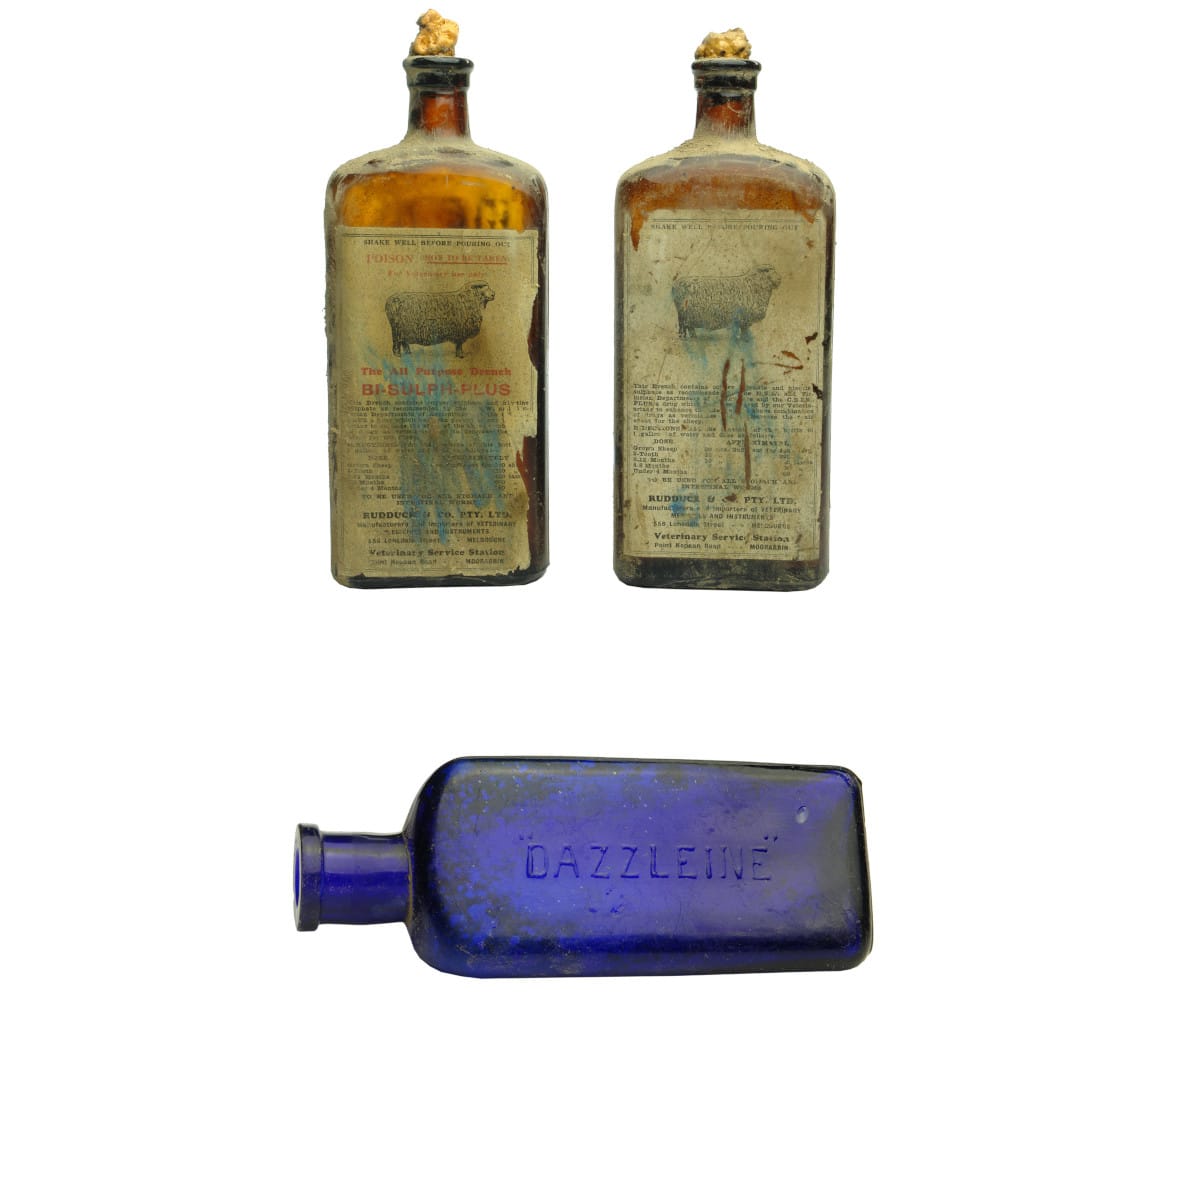 3 Bottles: 2 x Animal Cure. Rudduck & Co. Pty. Ltd. All Purpose Drench Bottles, Point Nepean Road, Moorabbin. Amber. 12-16 oz. (Victoria) Polish. Dazzleine. Cobalt. 2 oz.